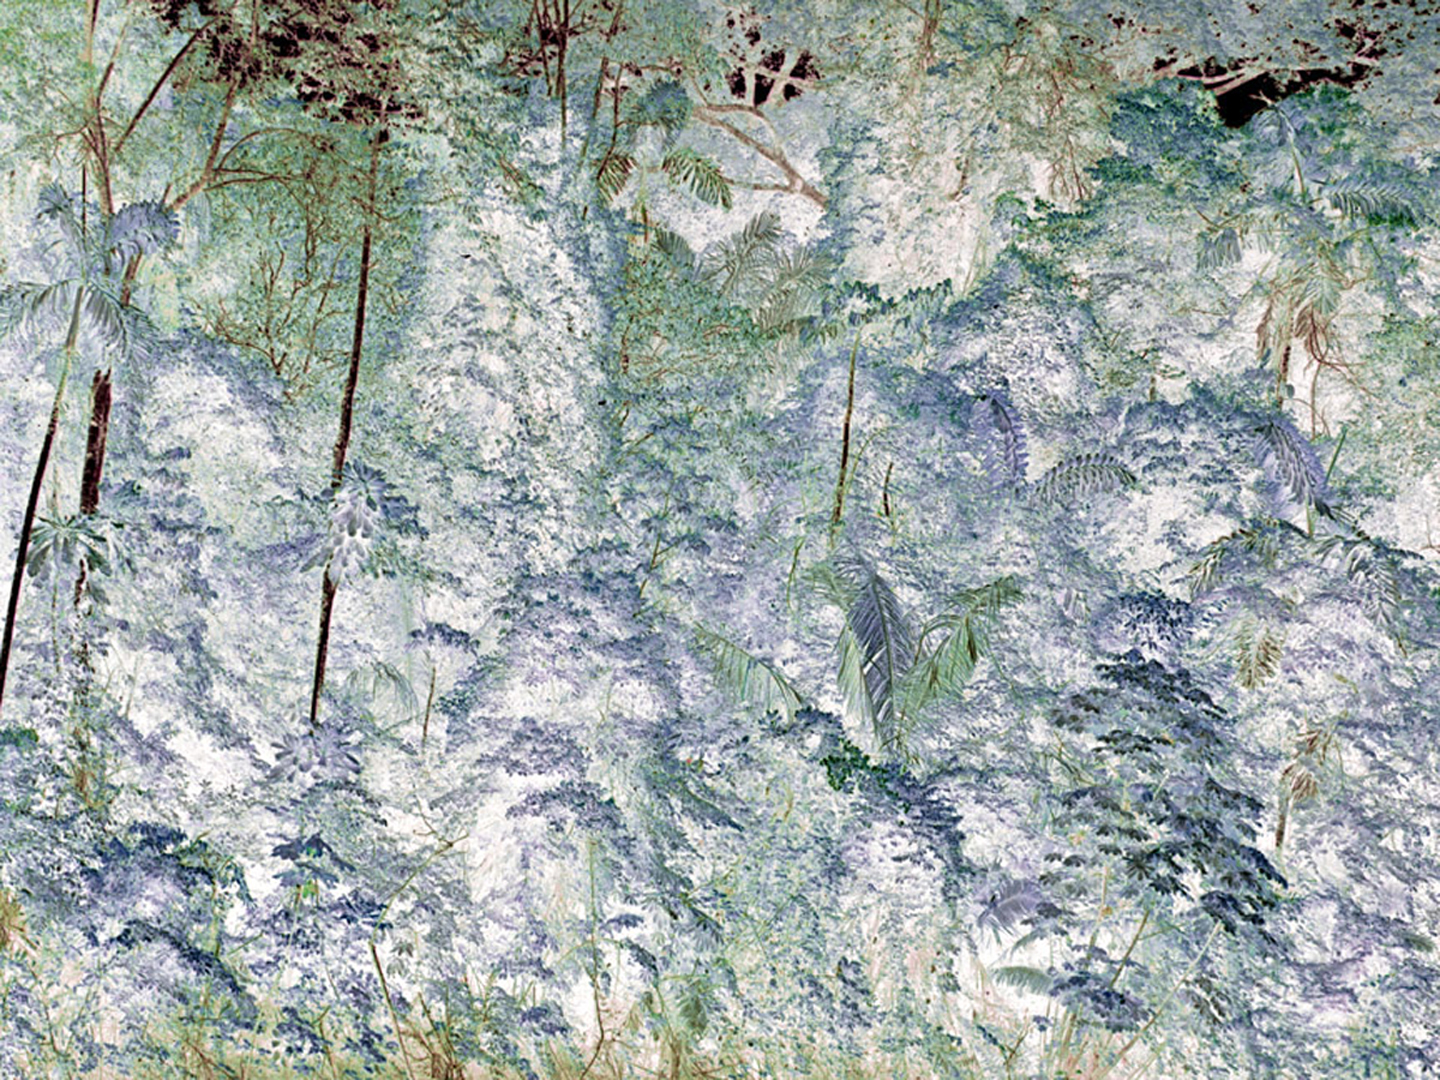   Full Forest,  Tiputini River,&nbsp;Ecuador, 2009  Archival ink jet print on Masa paper  30” x 40”   